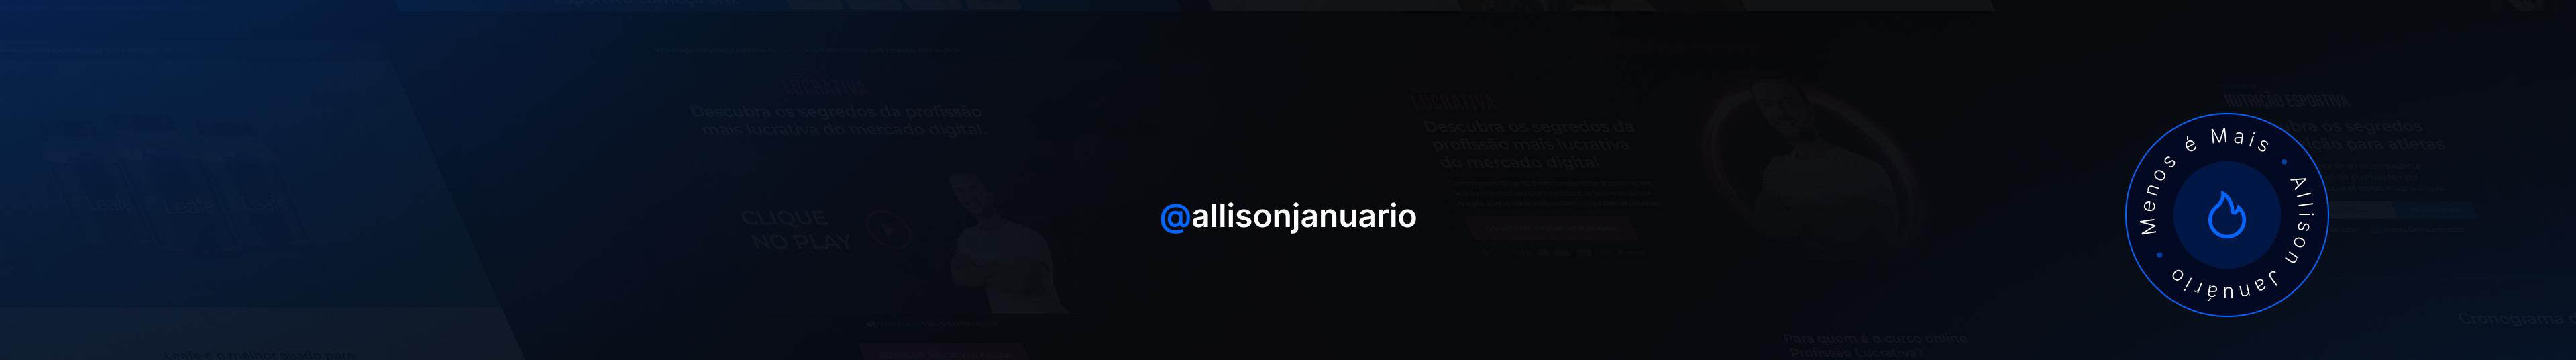 Allison Januário's profile banner